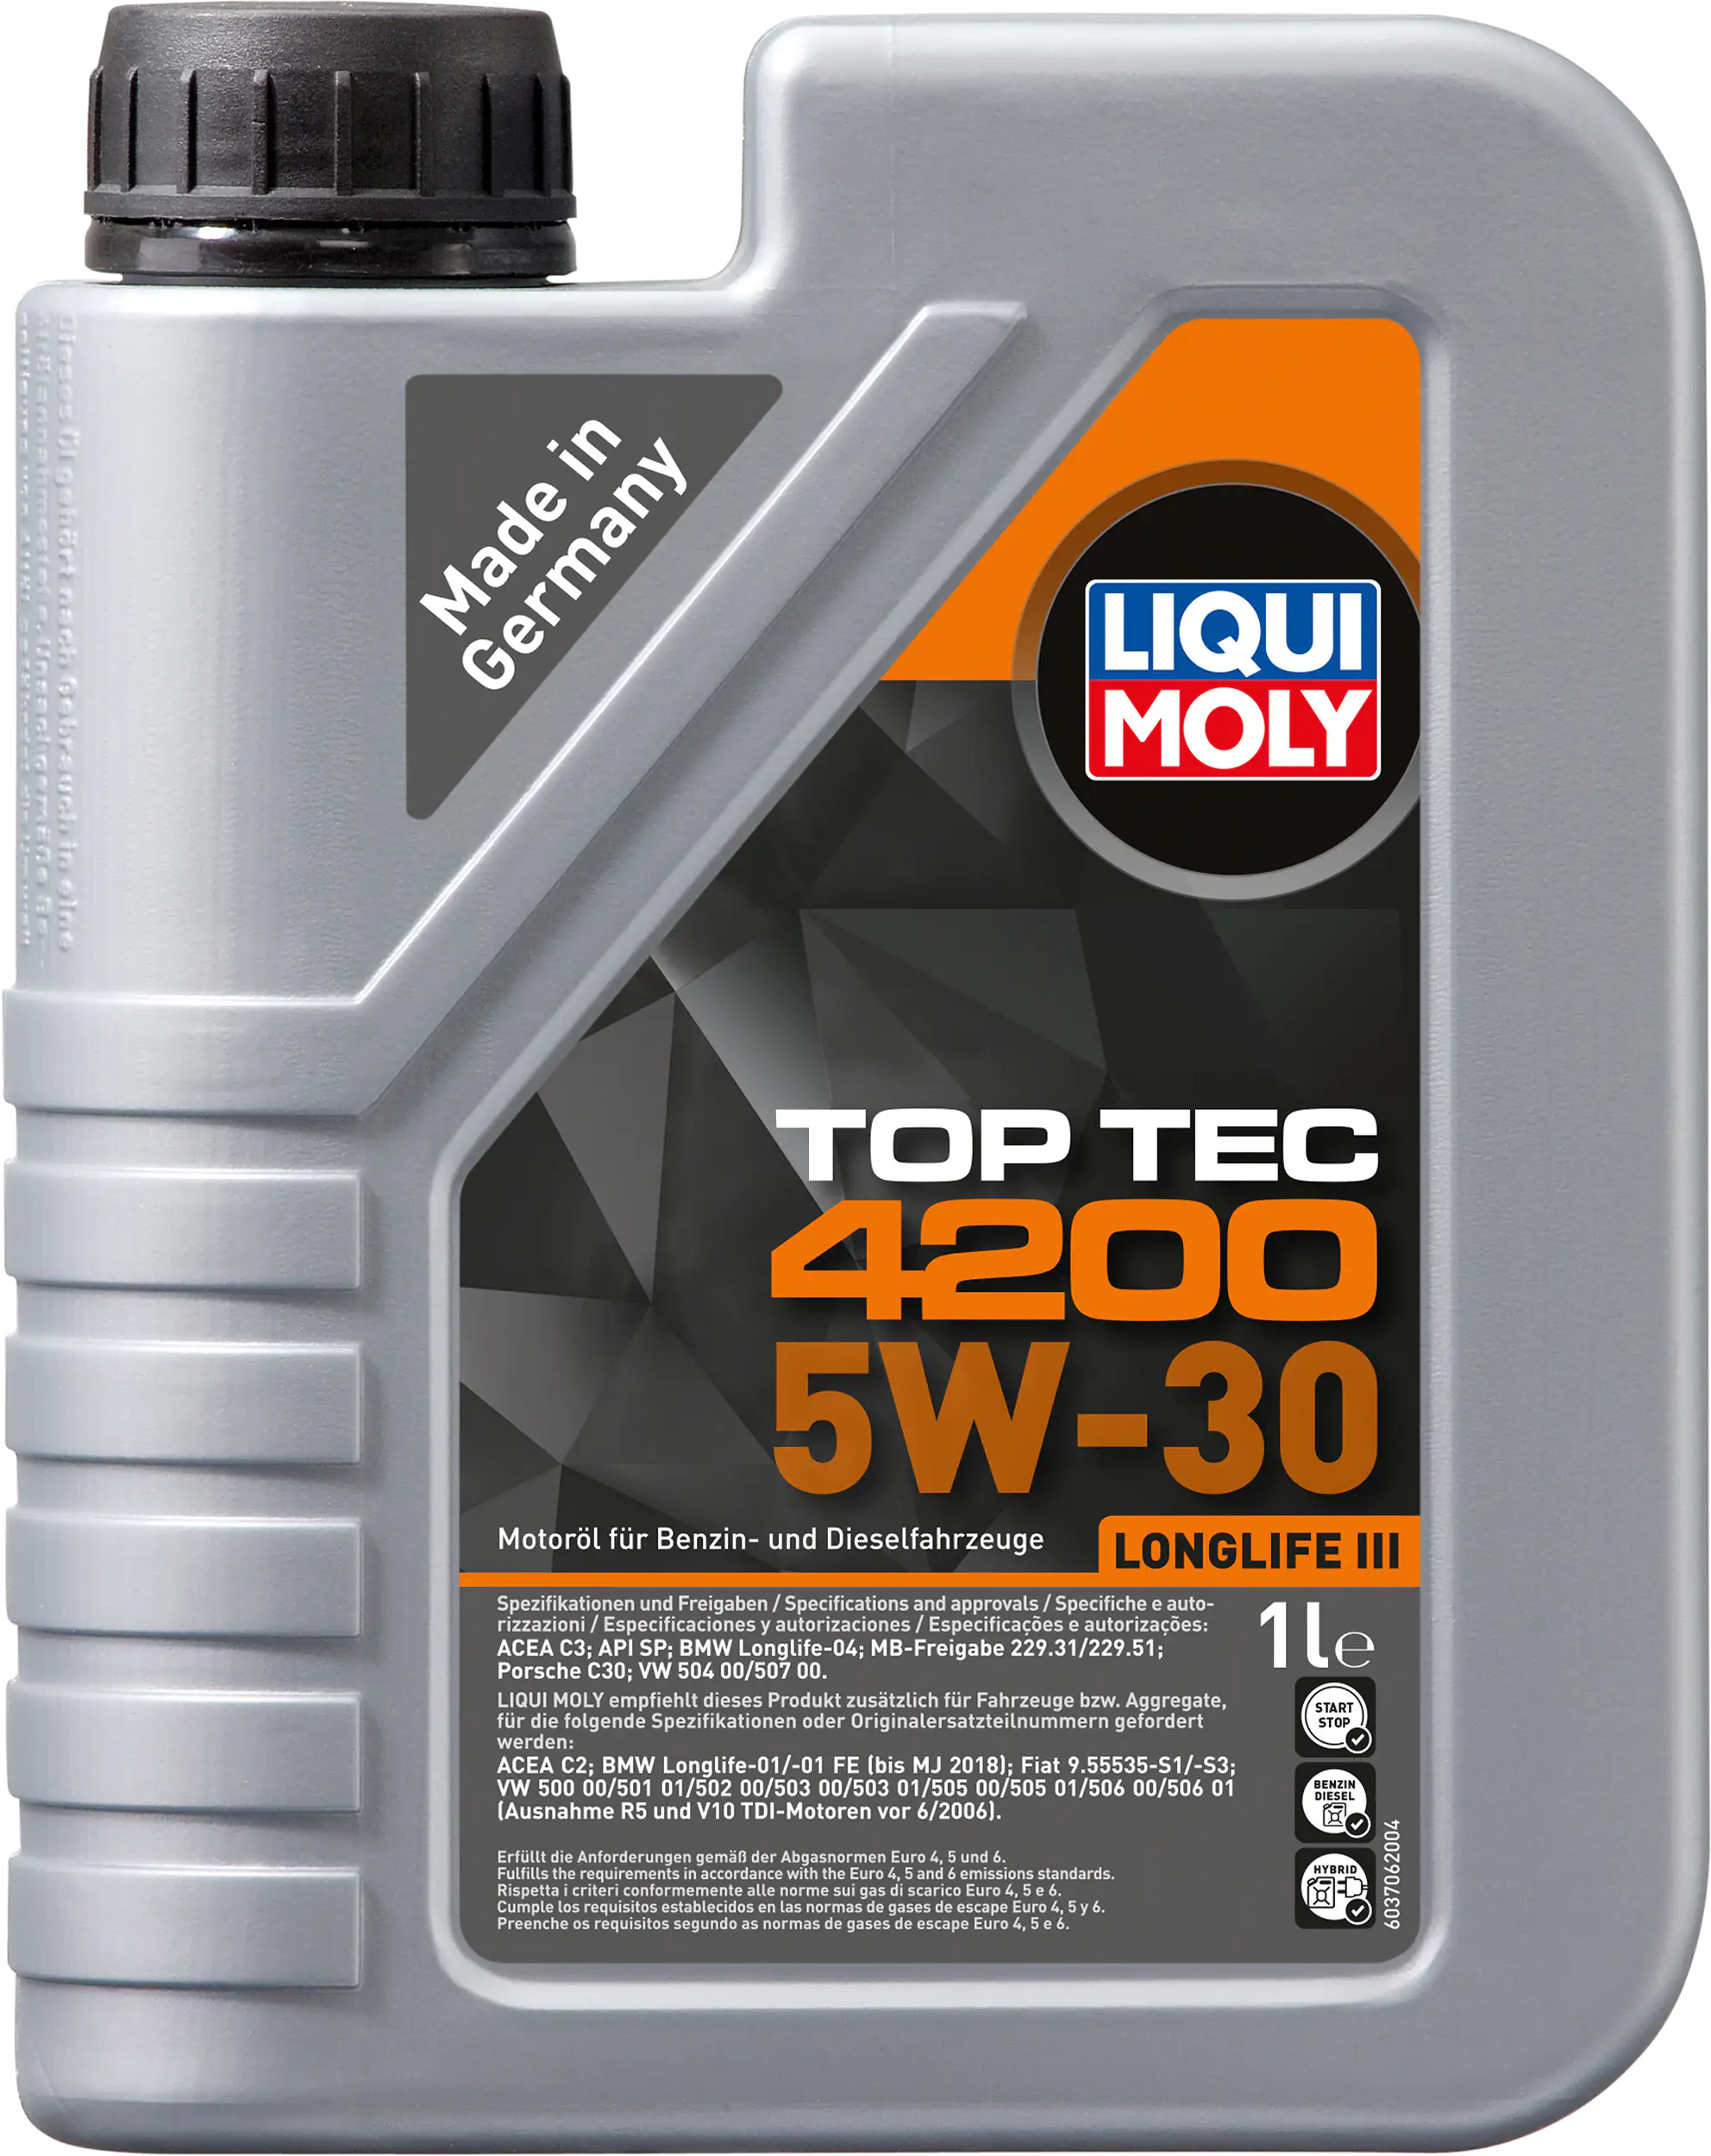 Liqui Moly Motoröl Top Tec 4200 SAE 5W-30 Longlife III 1 L kaufen